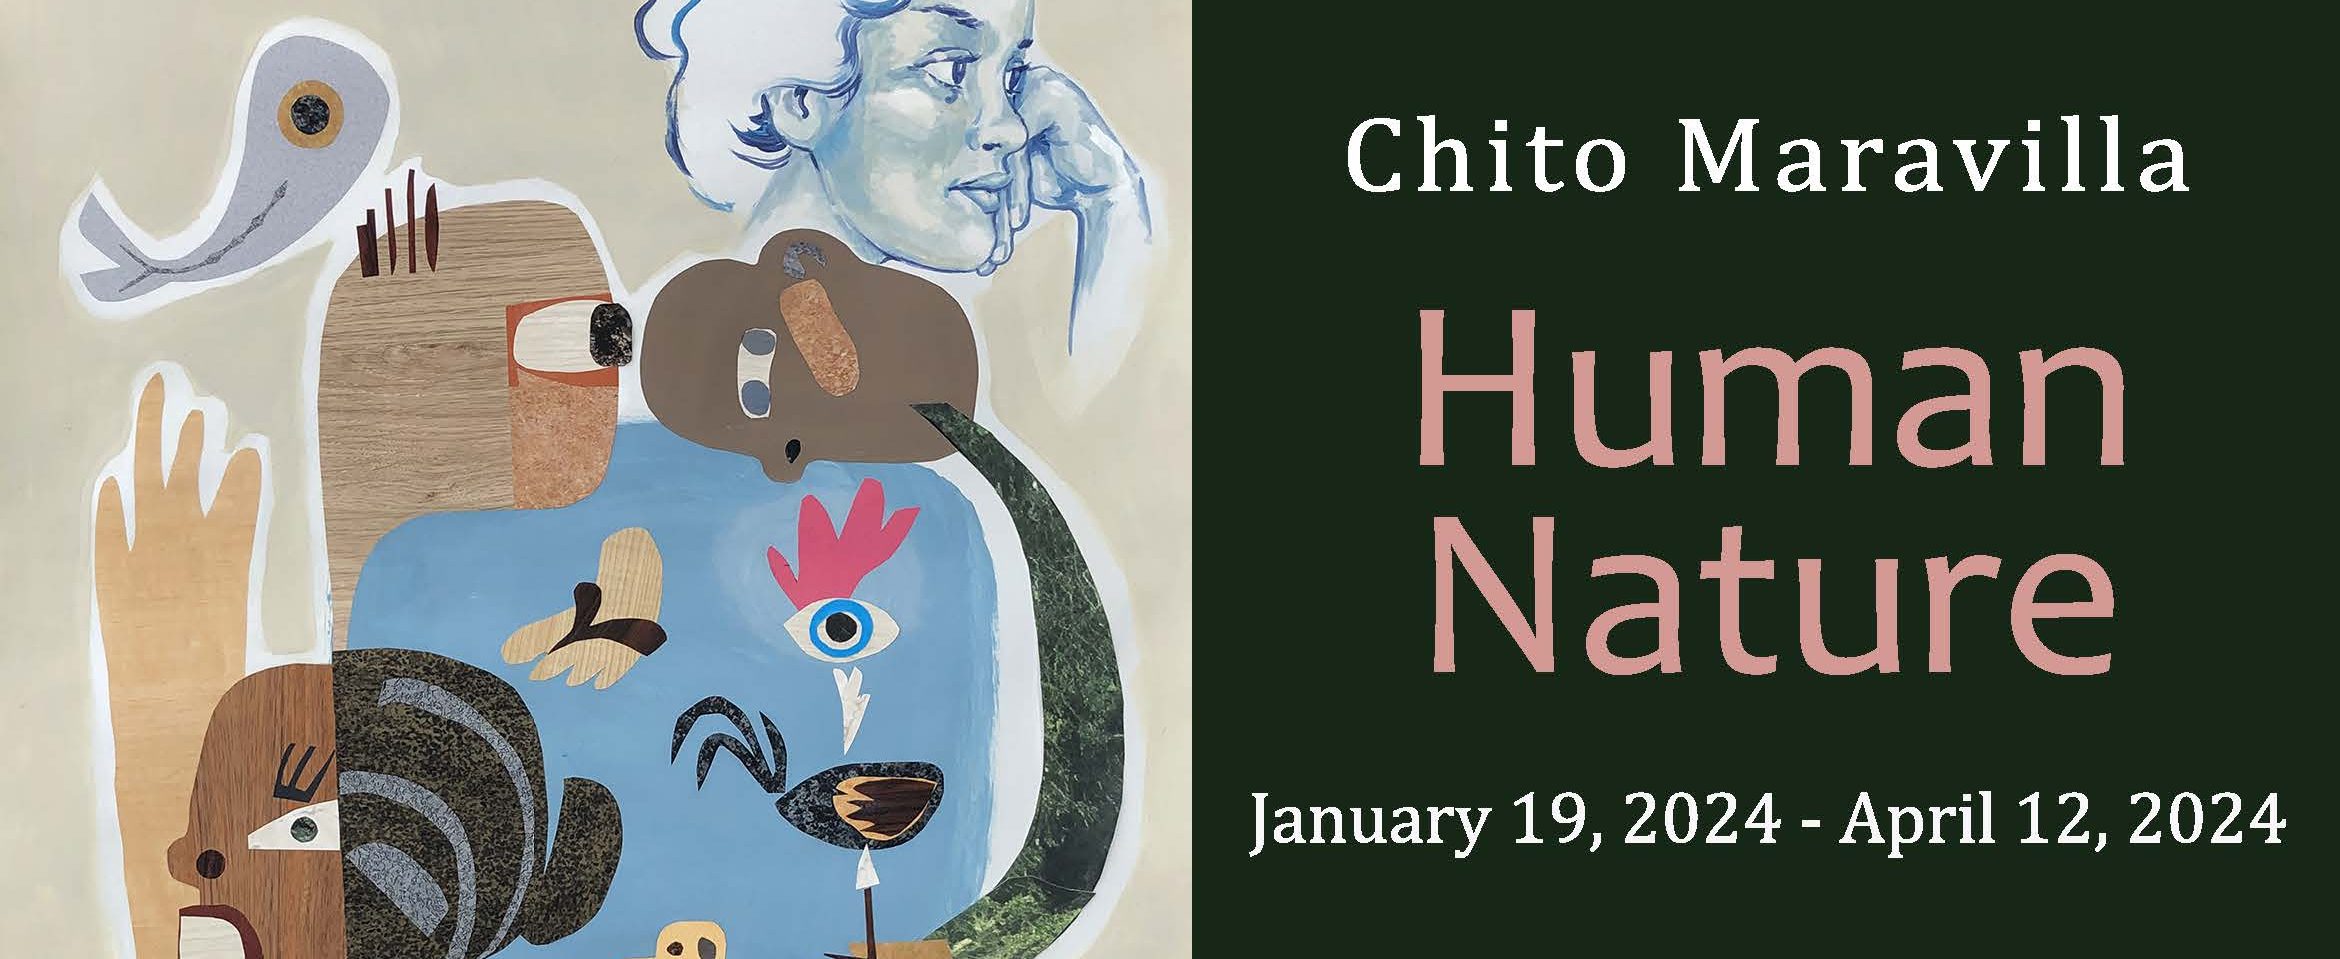 Philippine Consulate in Vancouver Hosts “Human Nature” Art Exhibit by Filipino-Canadian Artist Chito Maravilla